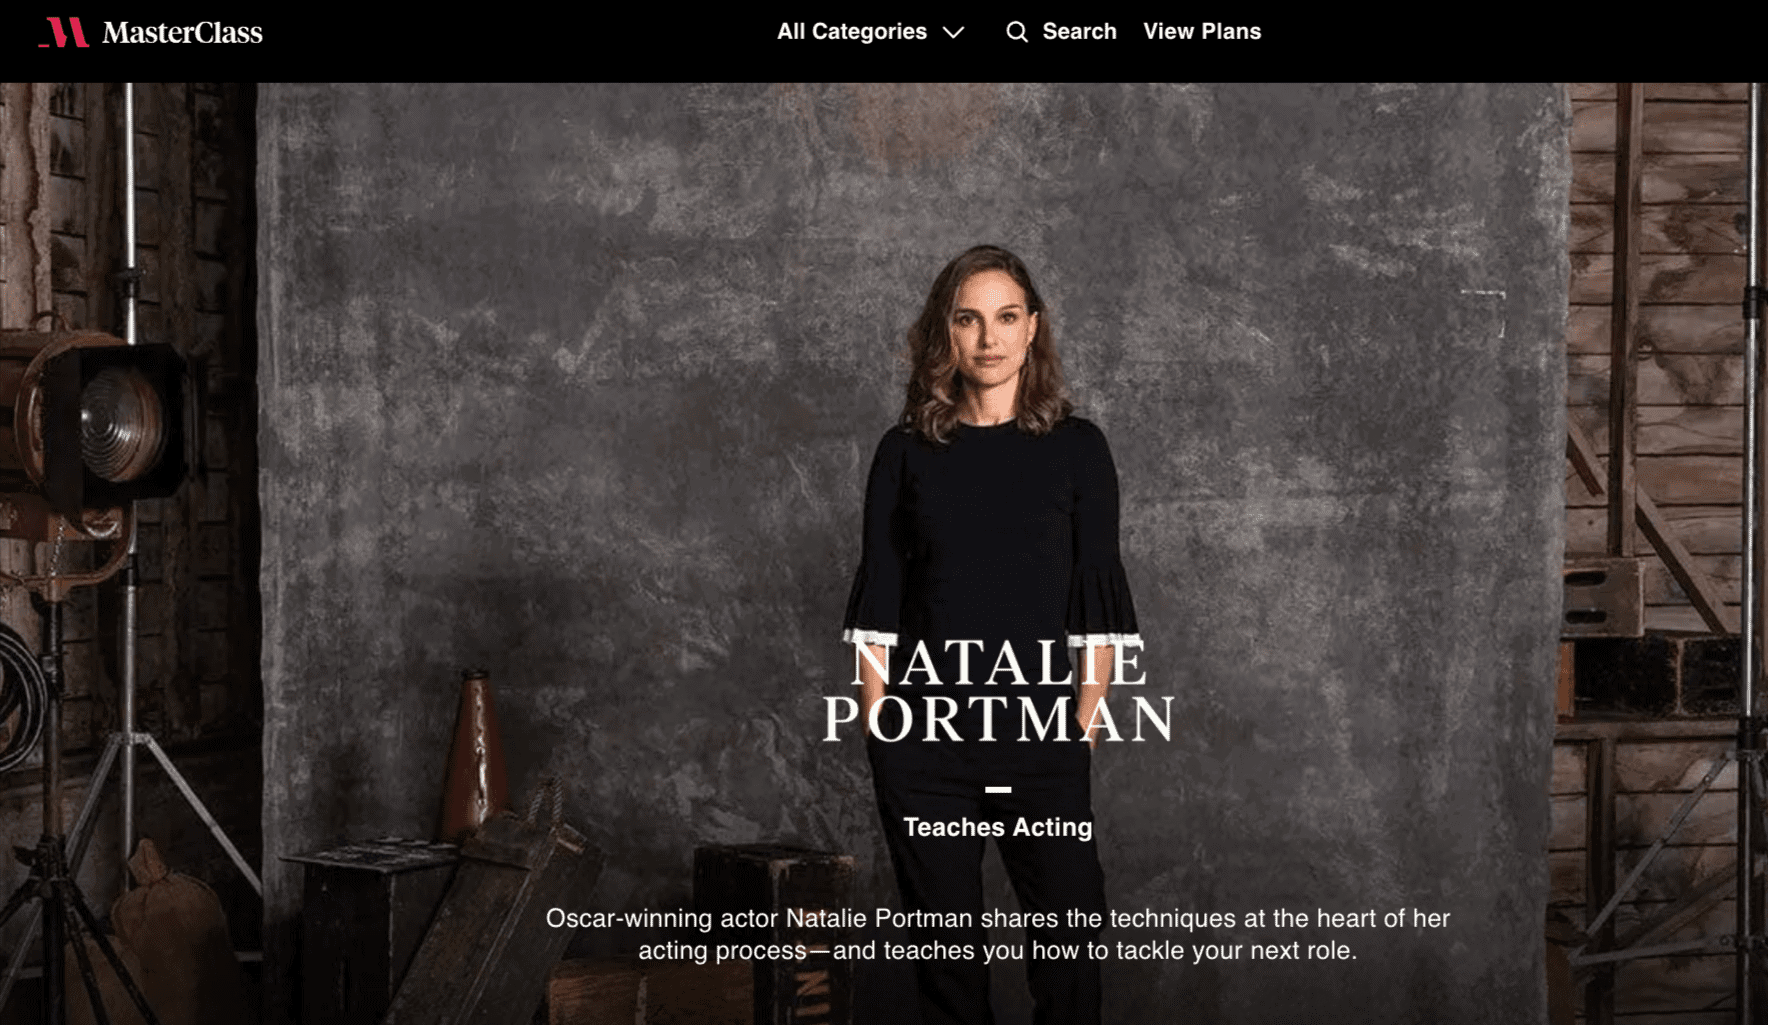 Natalie Portman MasterClass Review